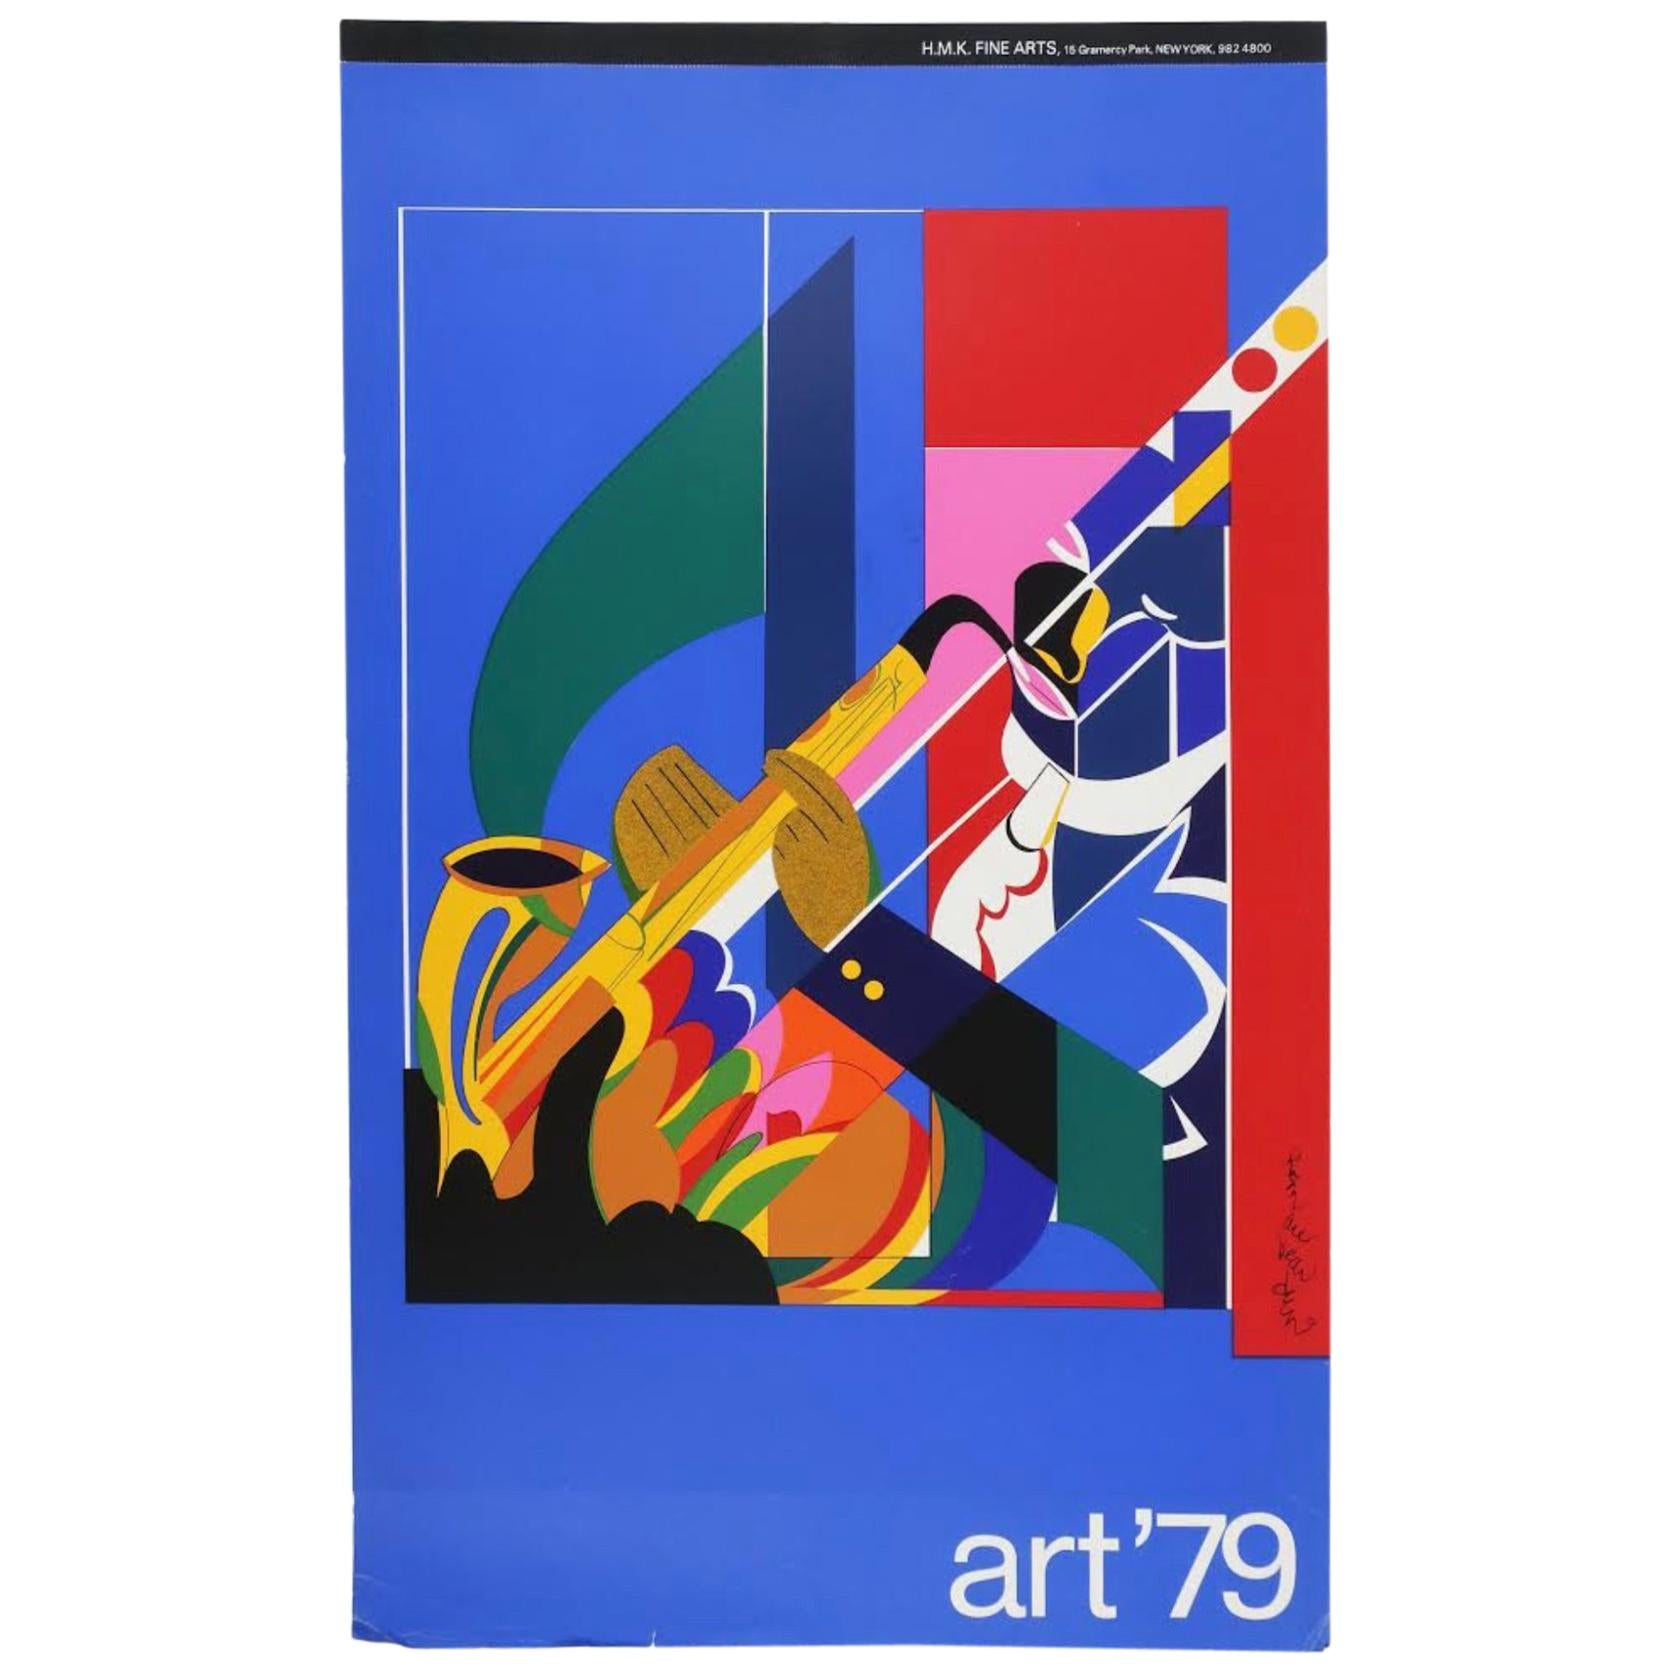 Art '79 Calendar of Prints by HMK Fine Arts